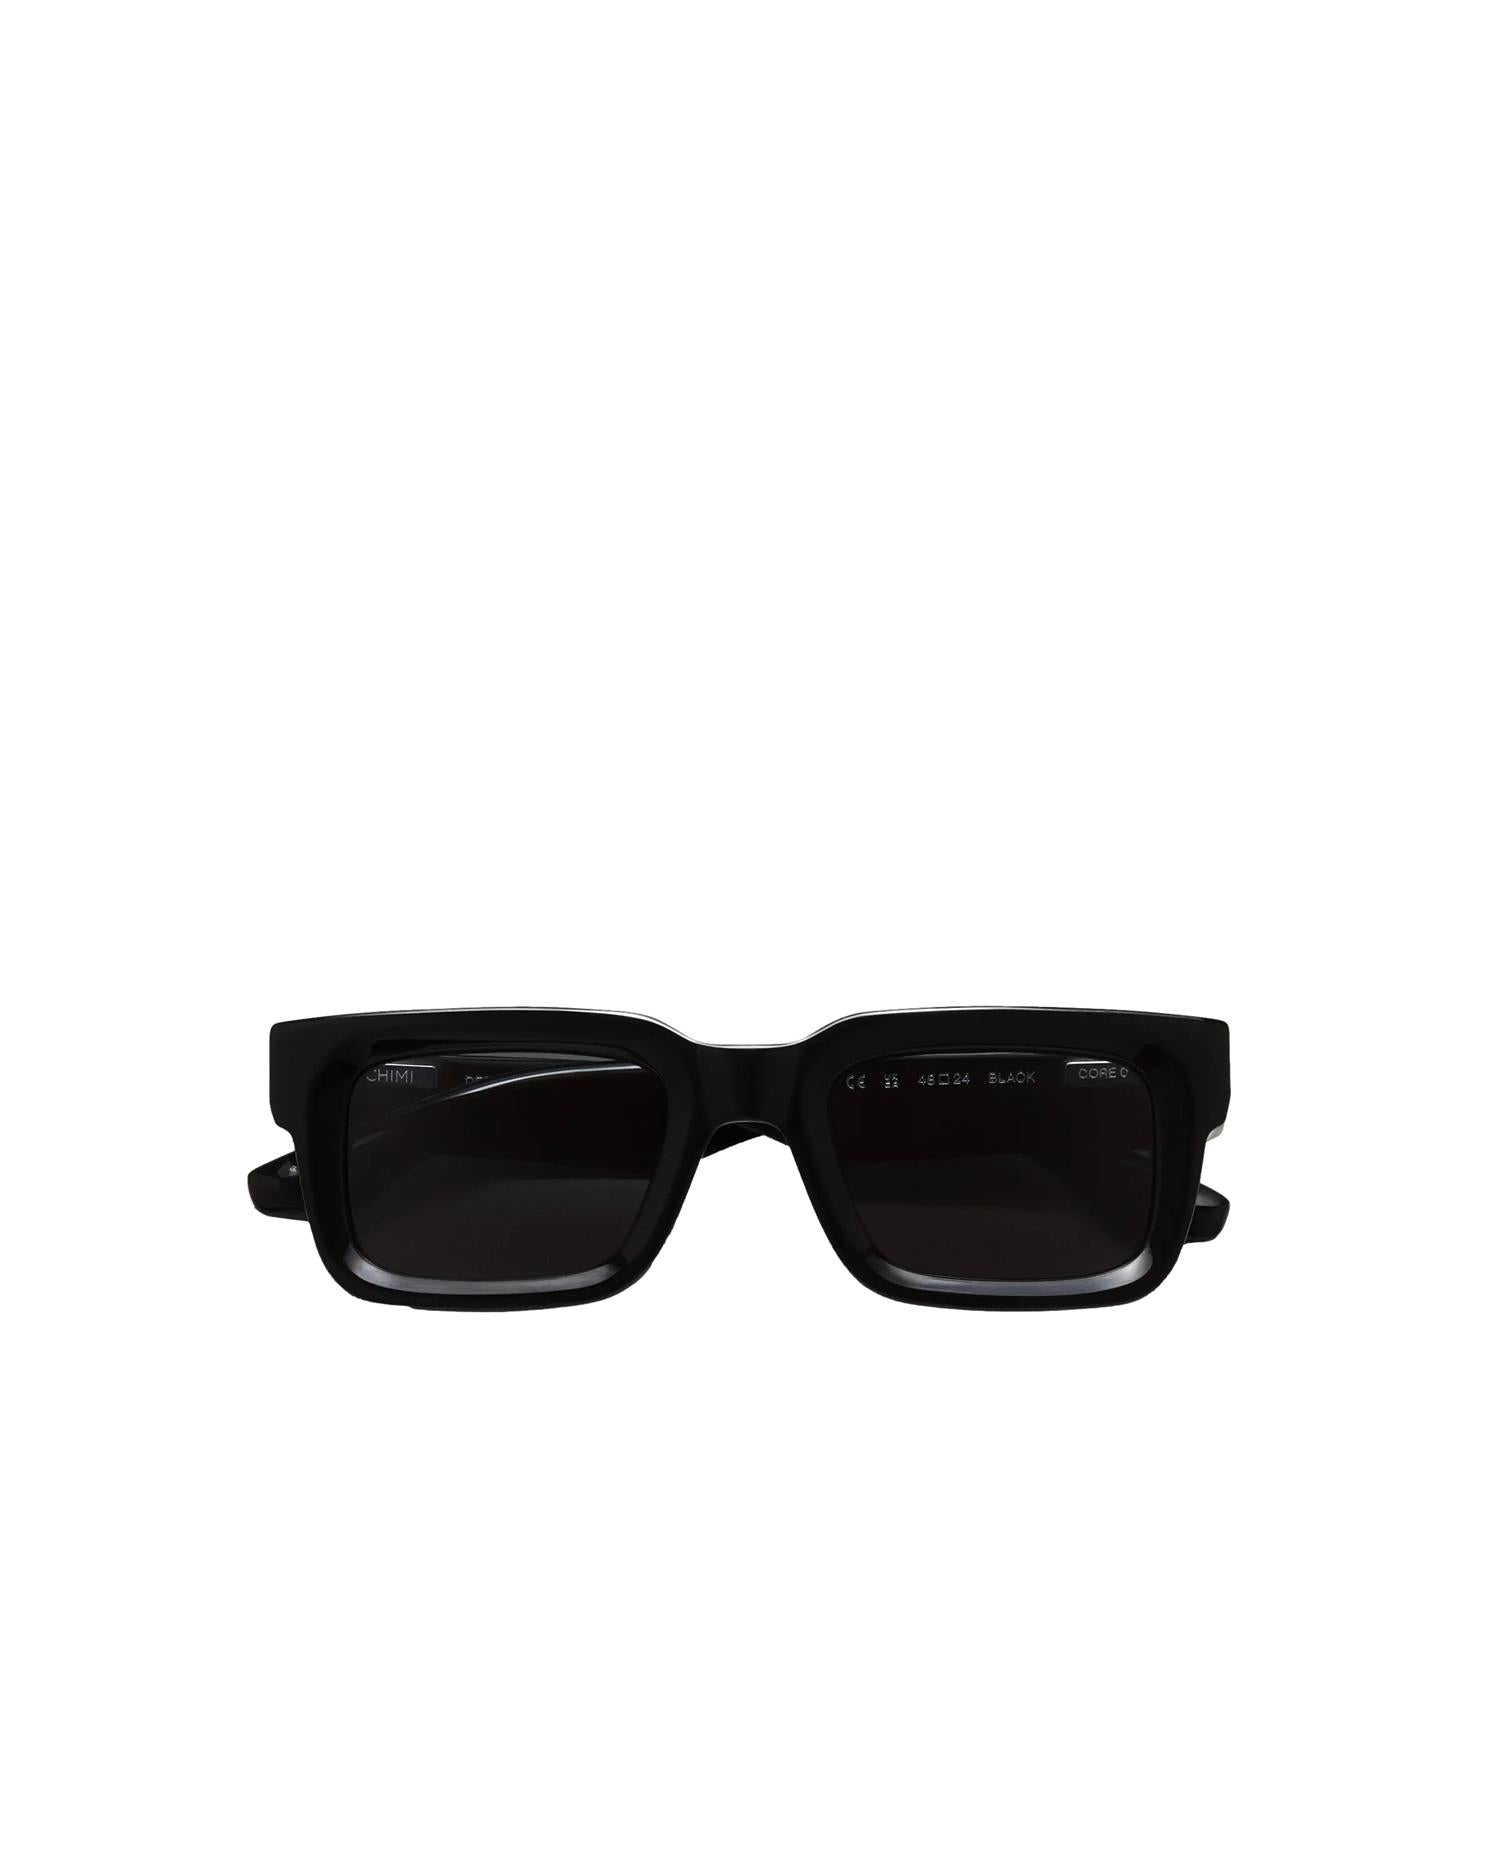 Chimi Eyewear Black 05 Solbriller Sort